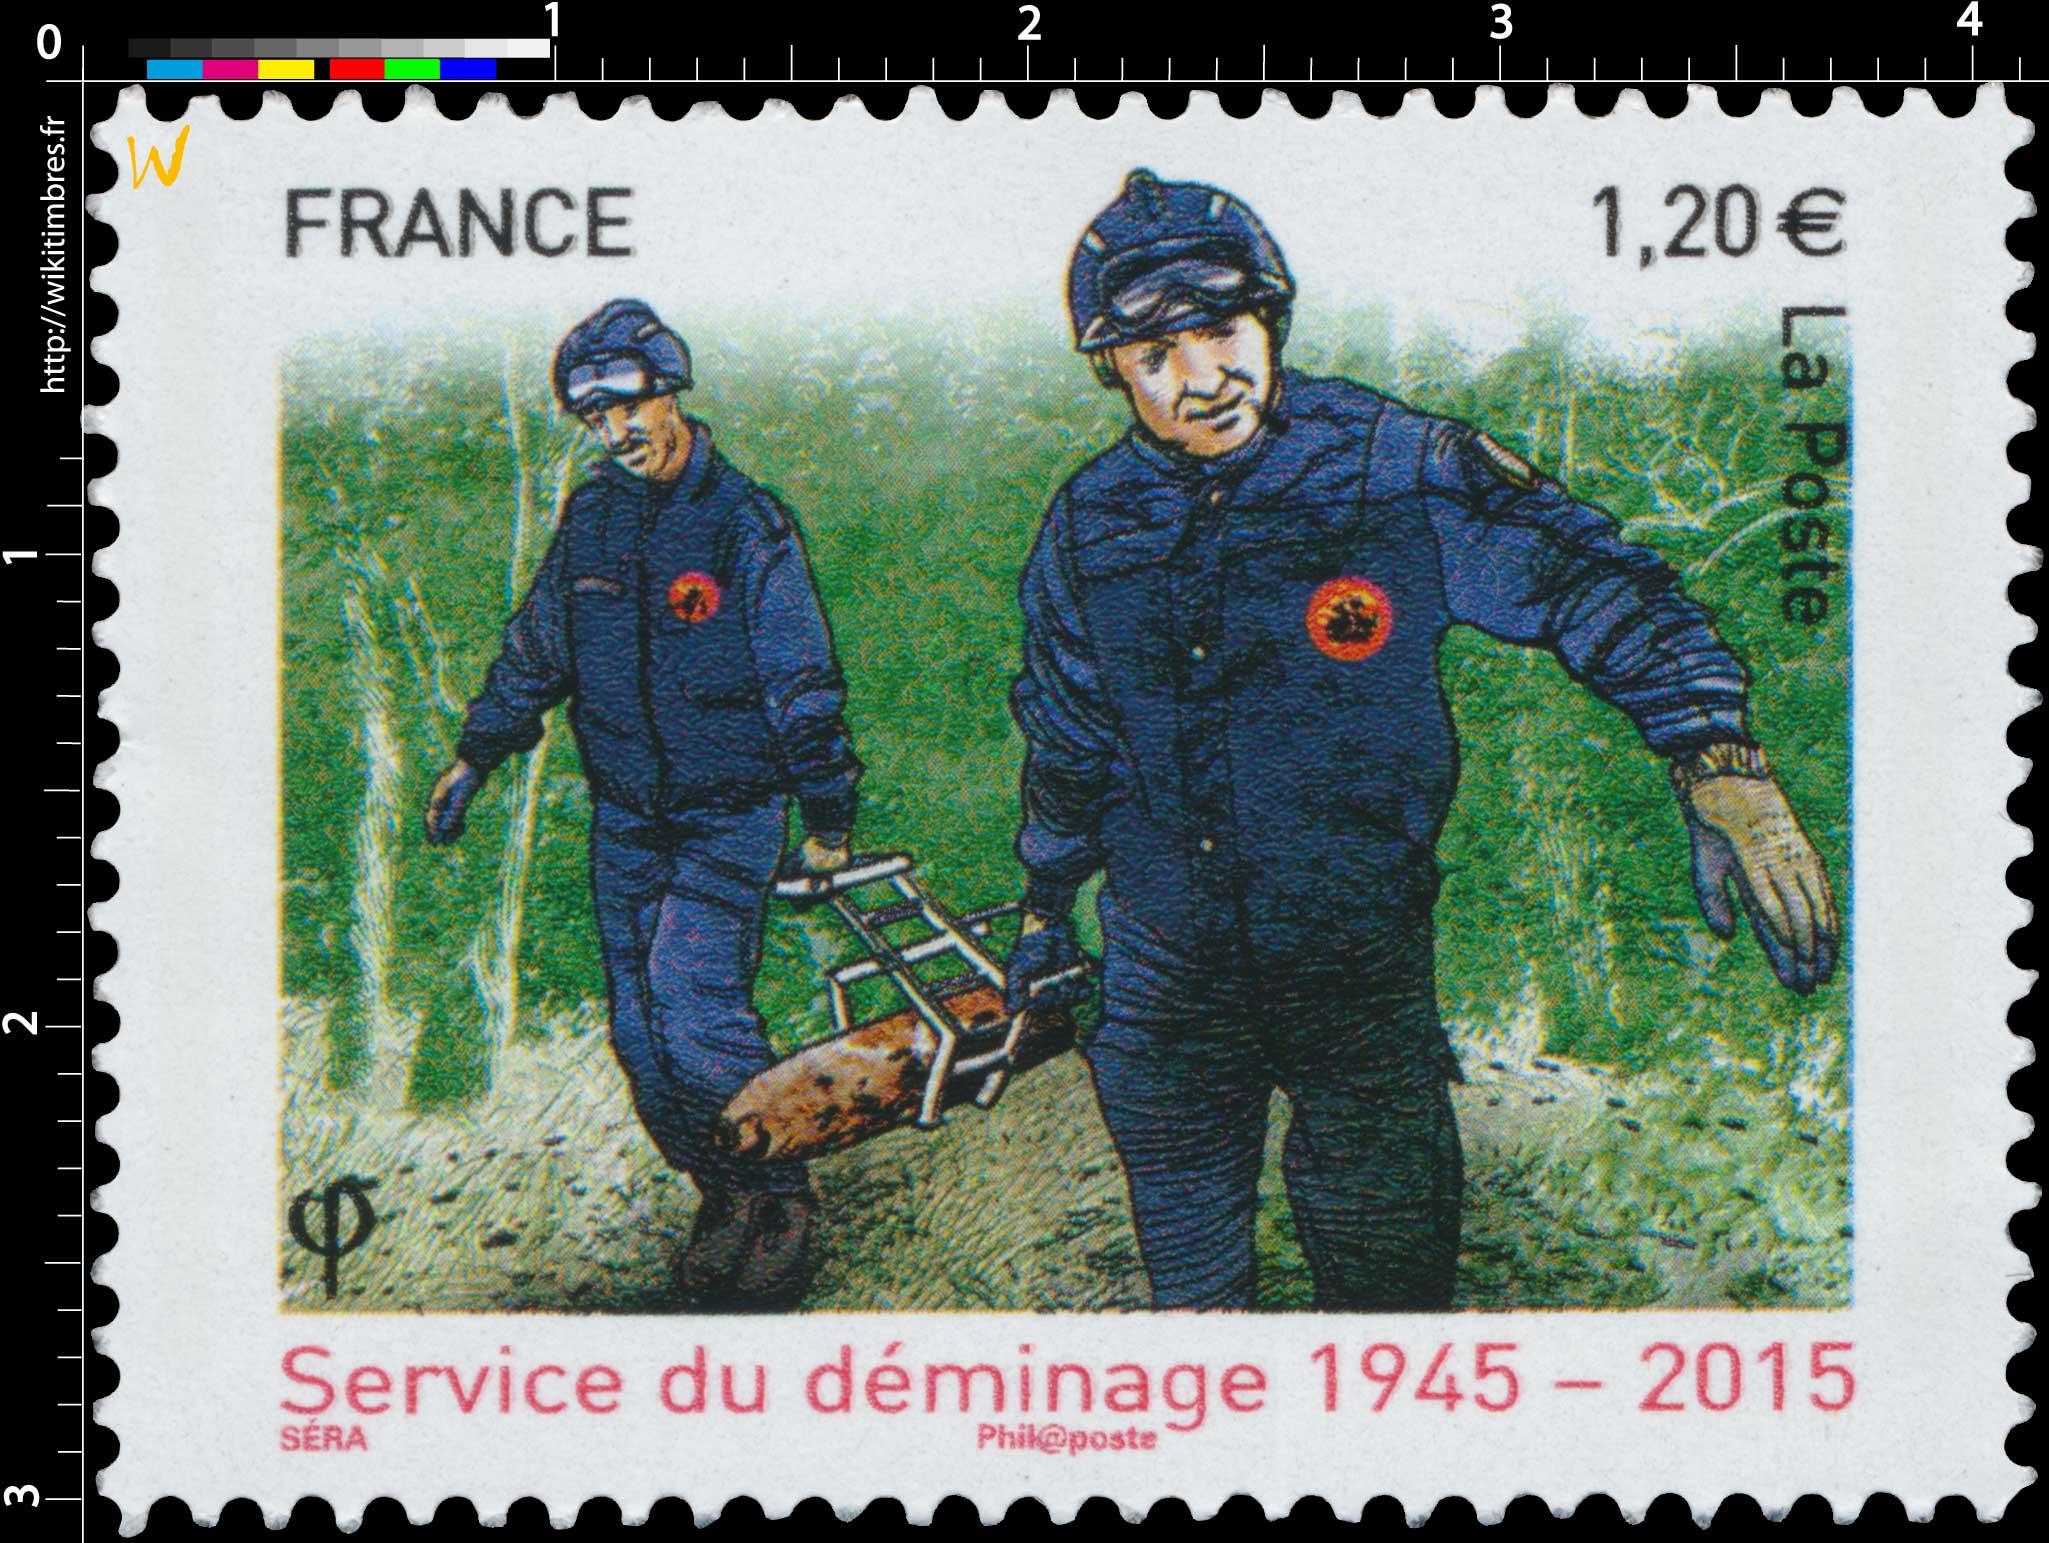 2015 Service du déminage 1945-2015